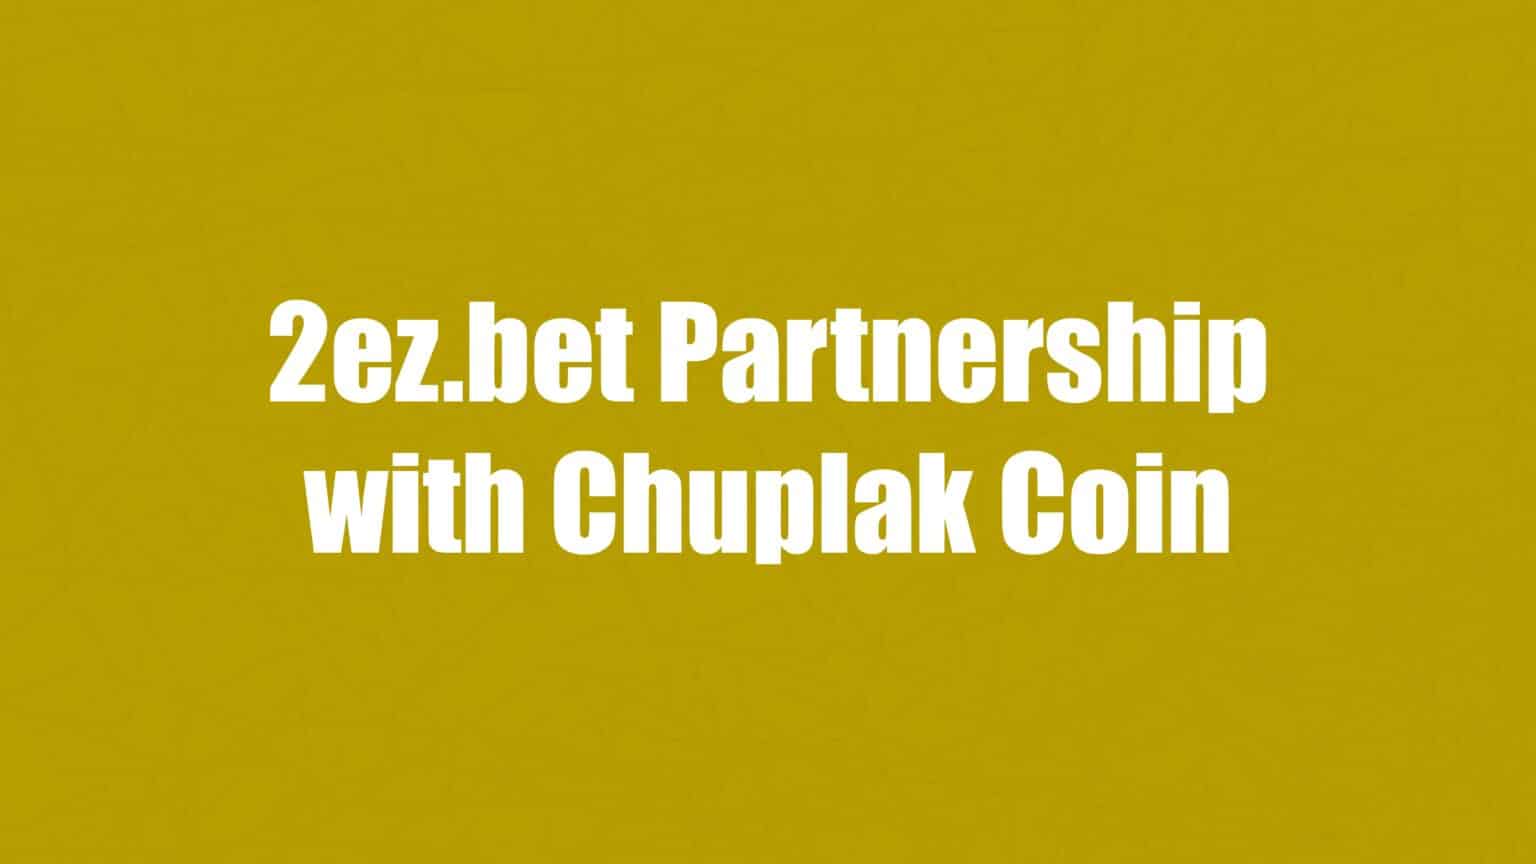 2ez.bet Partnership with Chuplak Coin